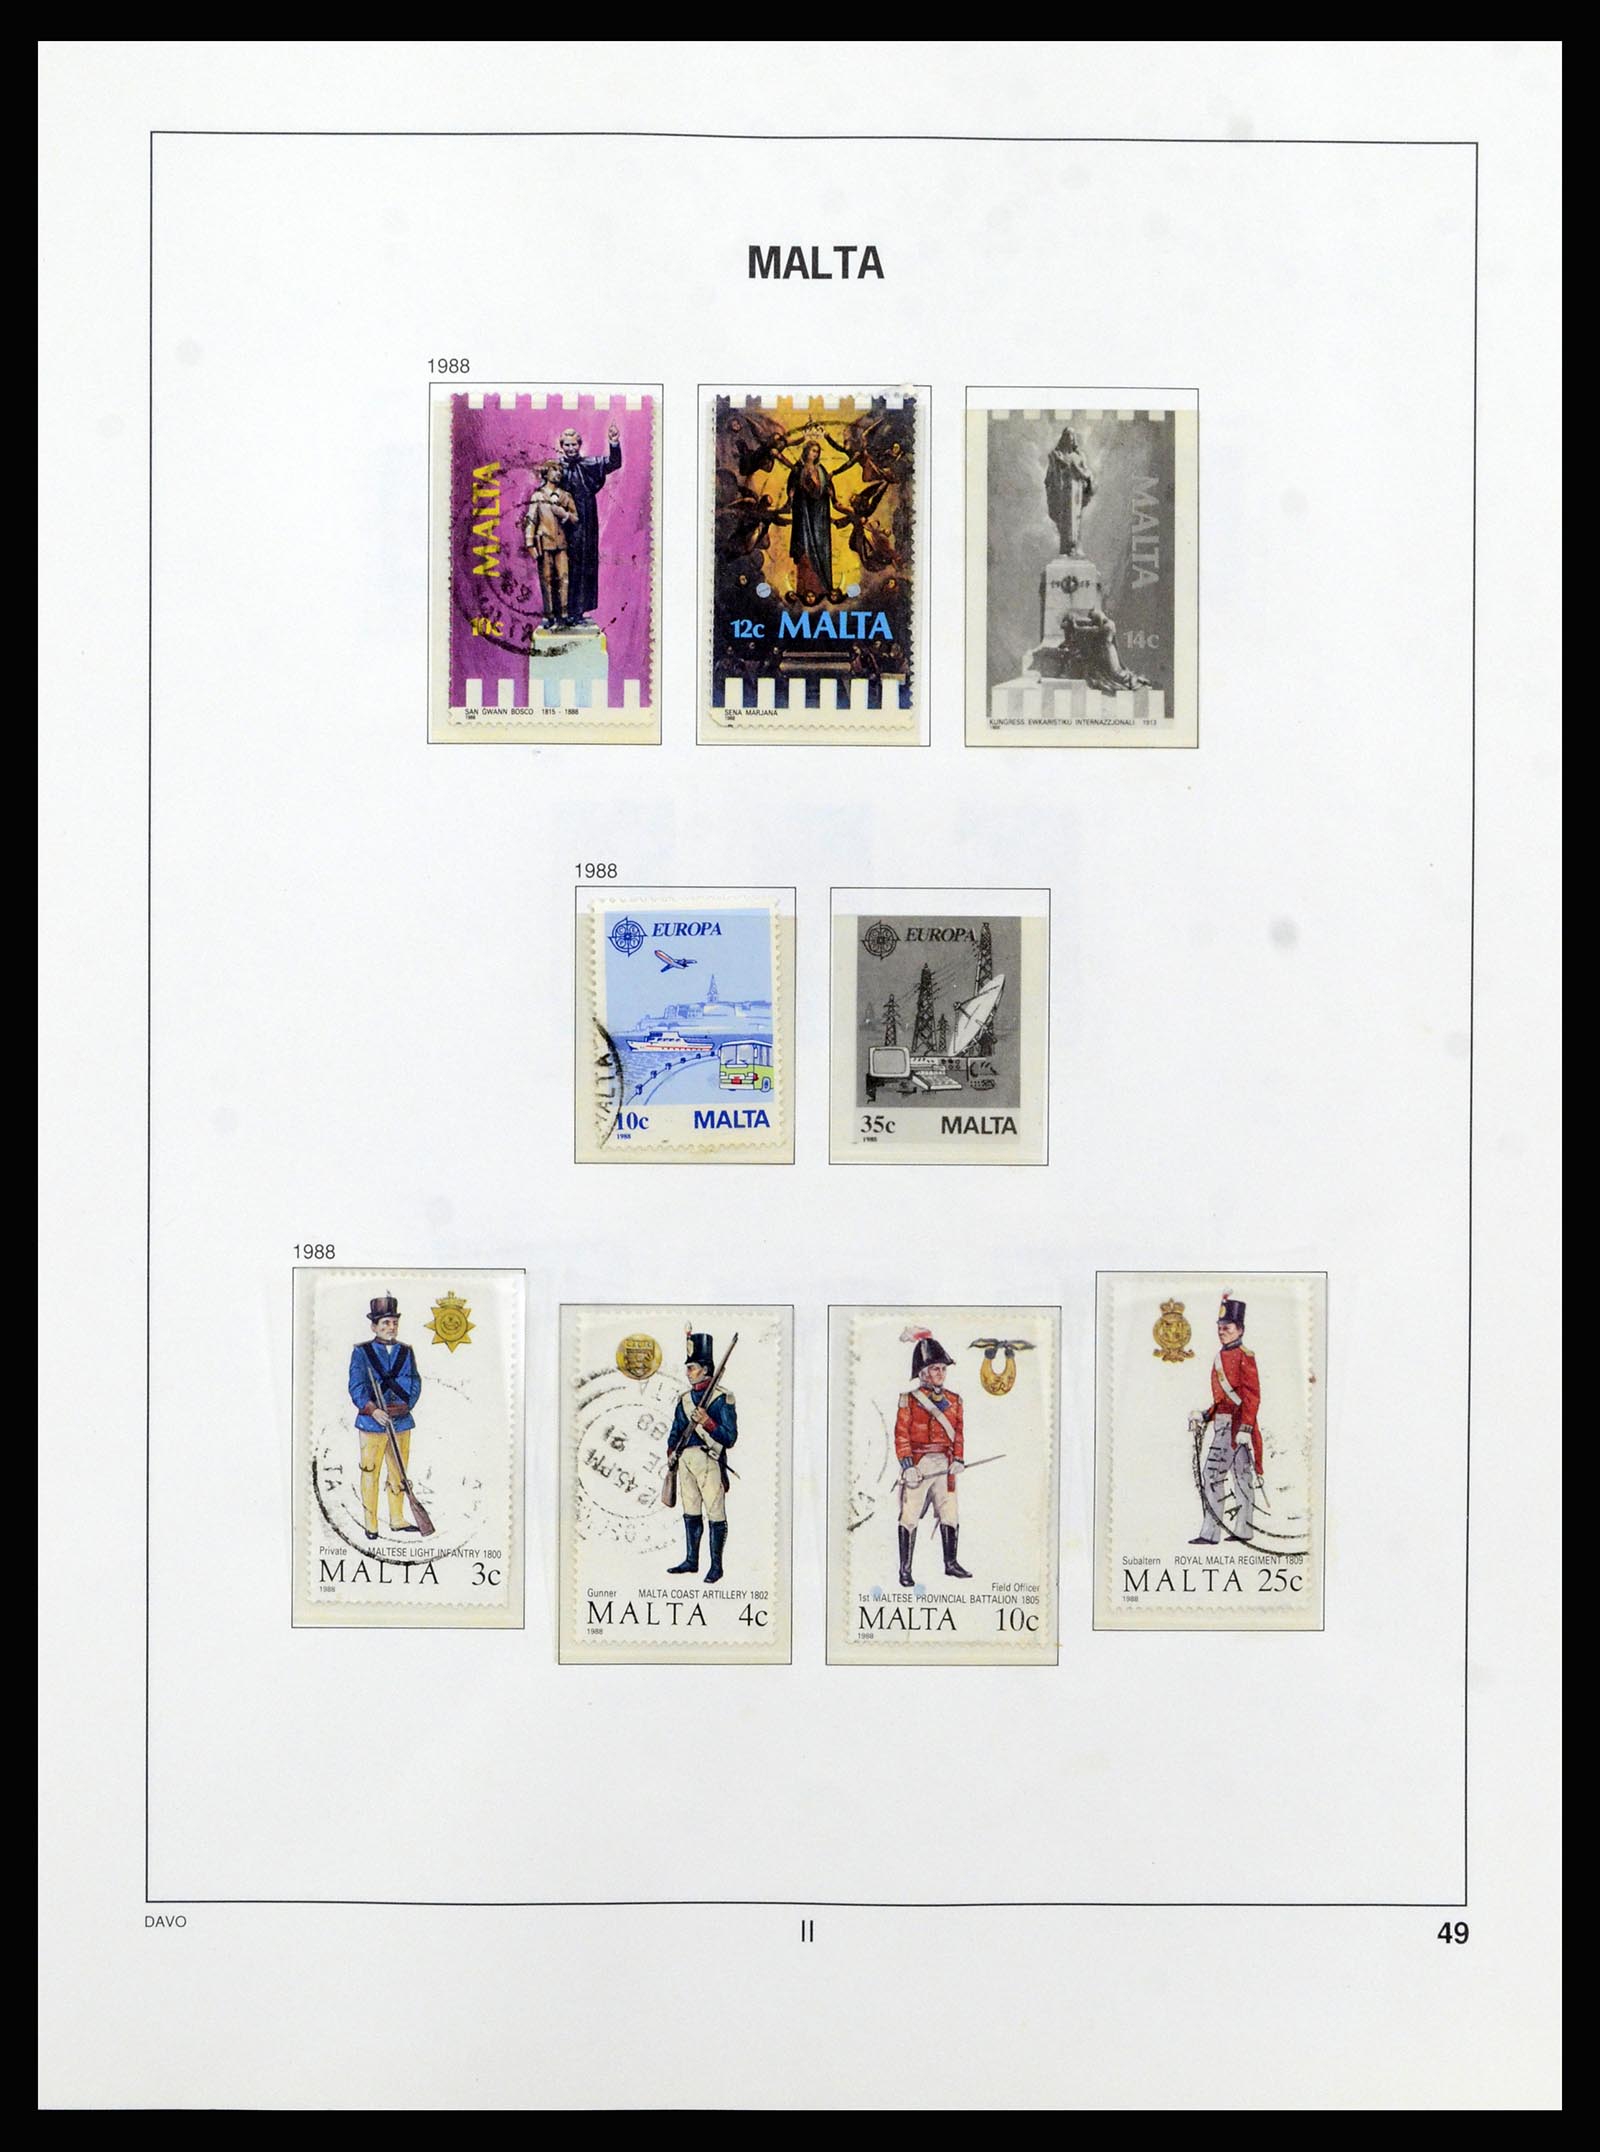 37212 073 - Stamp collection 37212 Malta 1863-1989.